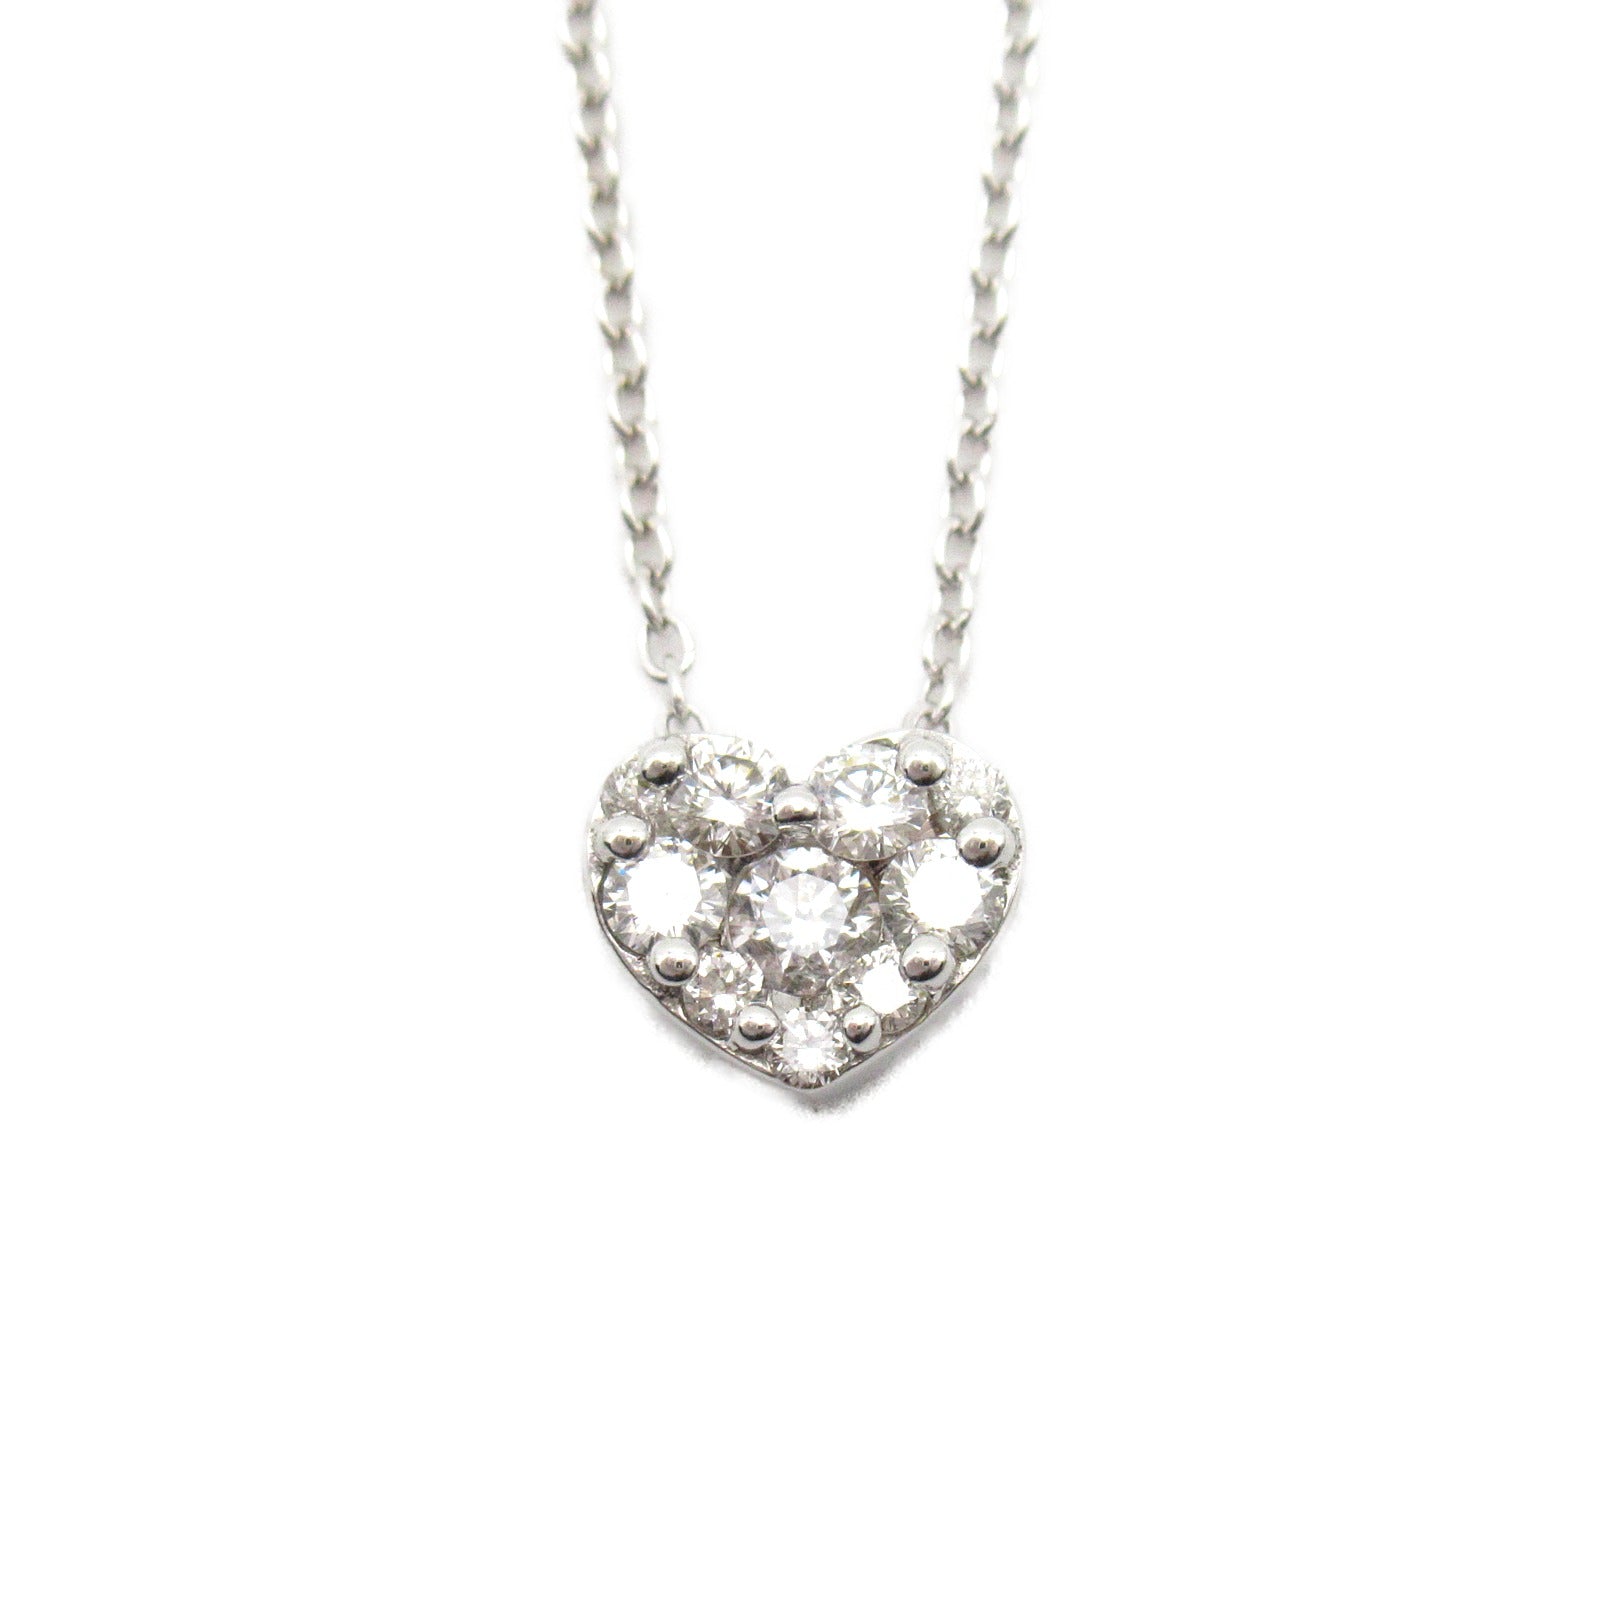 Ponte Vecchio diamond necklace necklace jewelry K18WG (White G) Diamond  Clear Diamond 2.7g